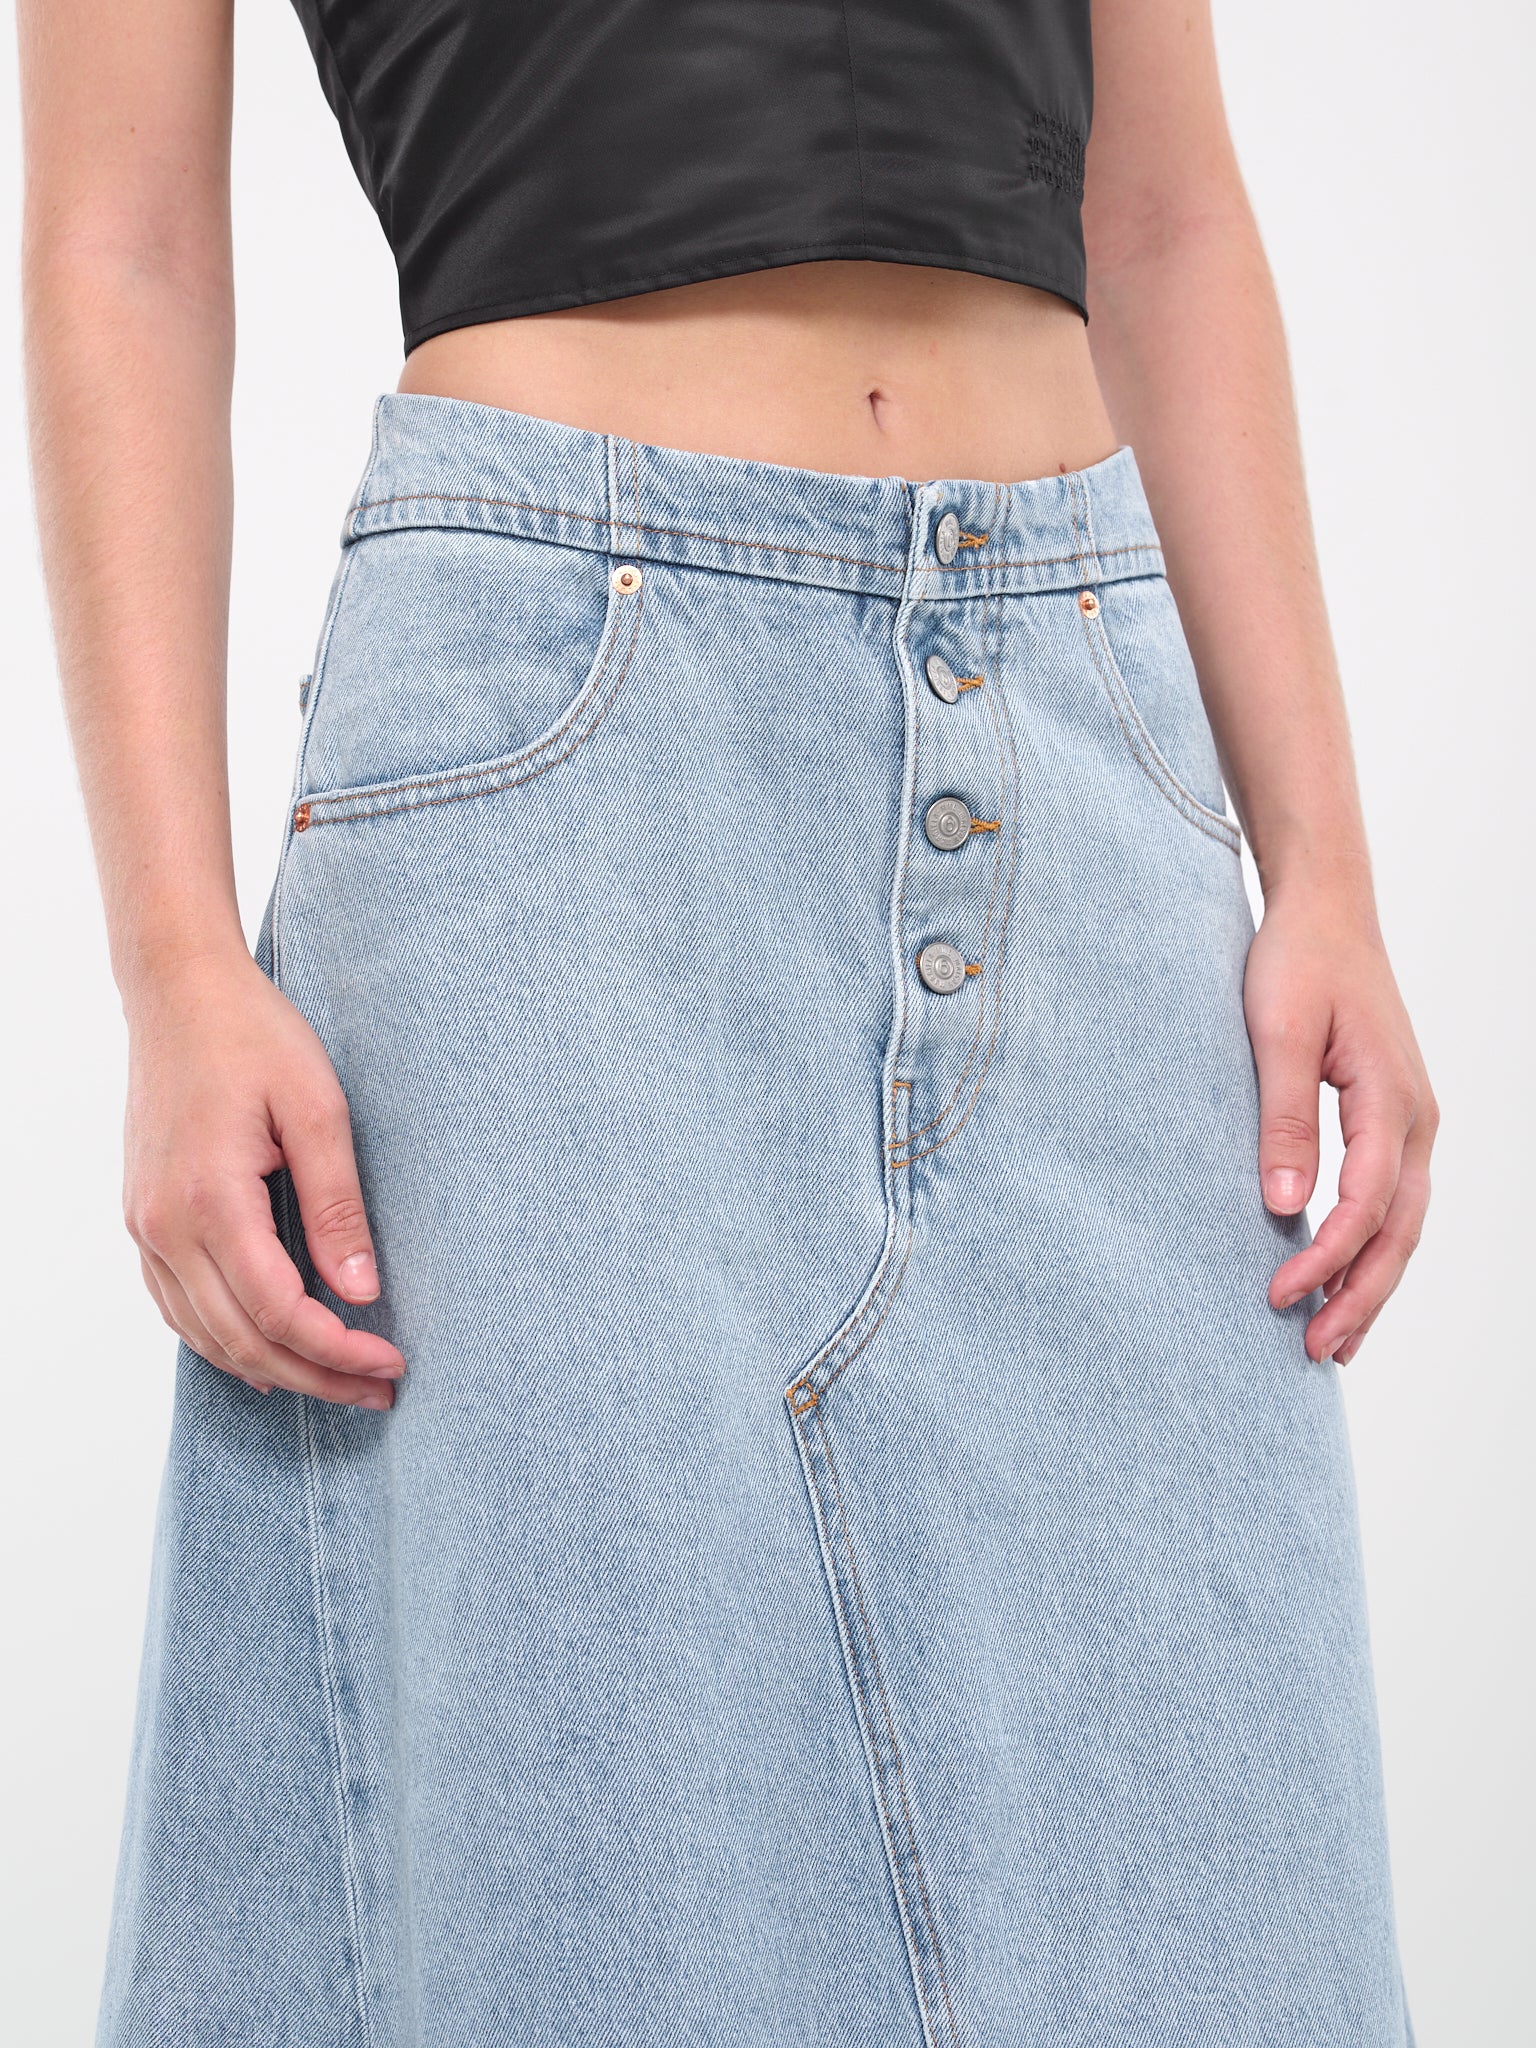 Asymmetric Seam Skirt (S52MI0002-S30589-975-BLUE)